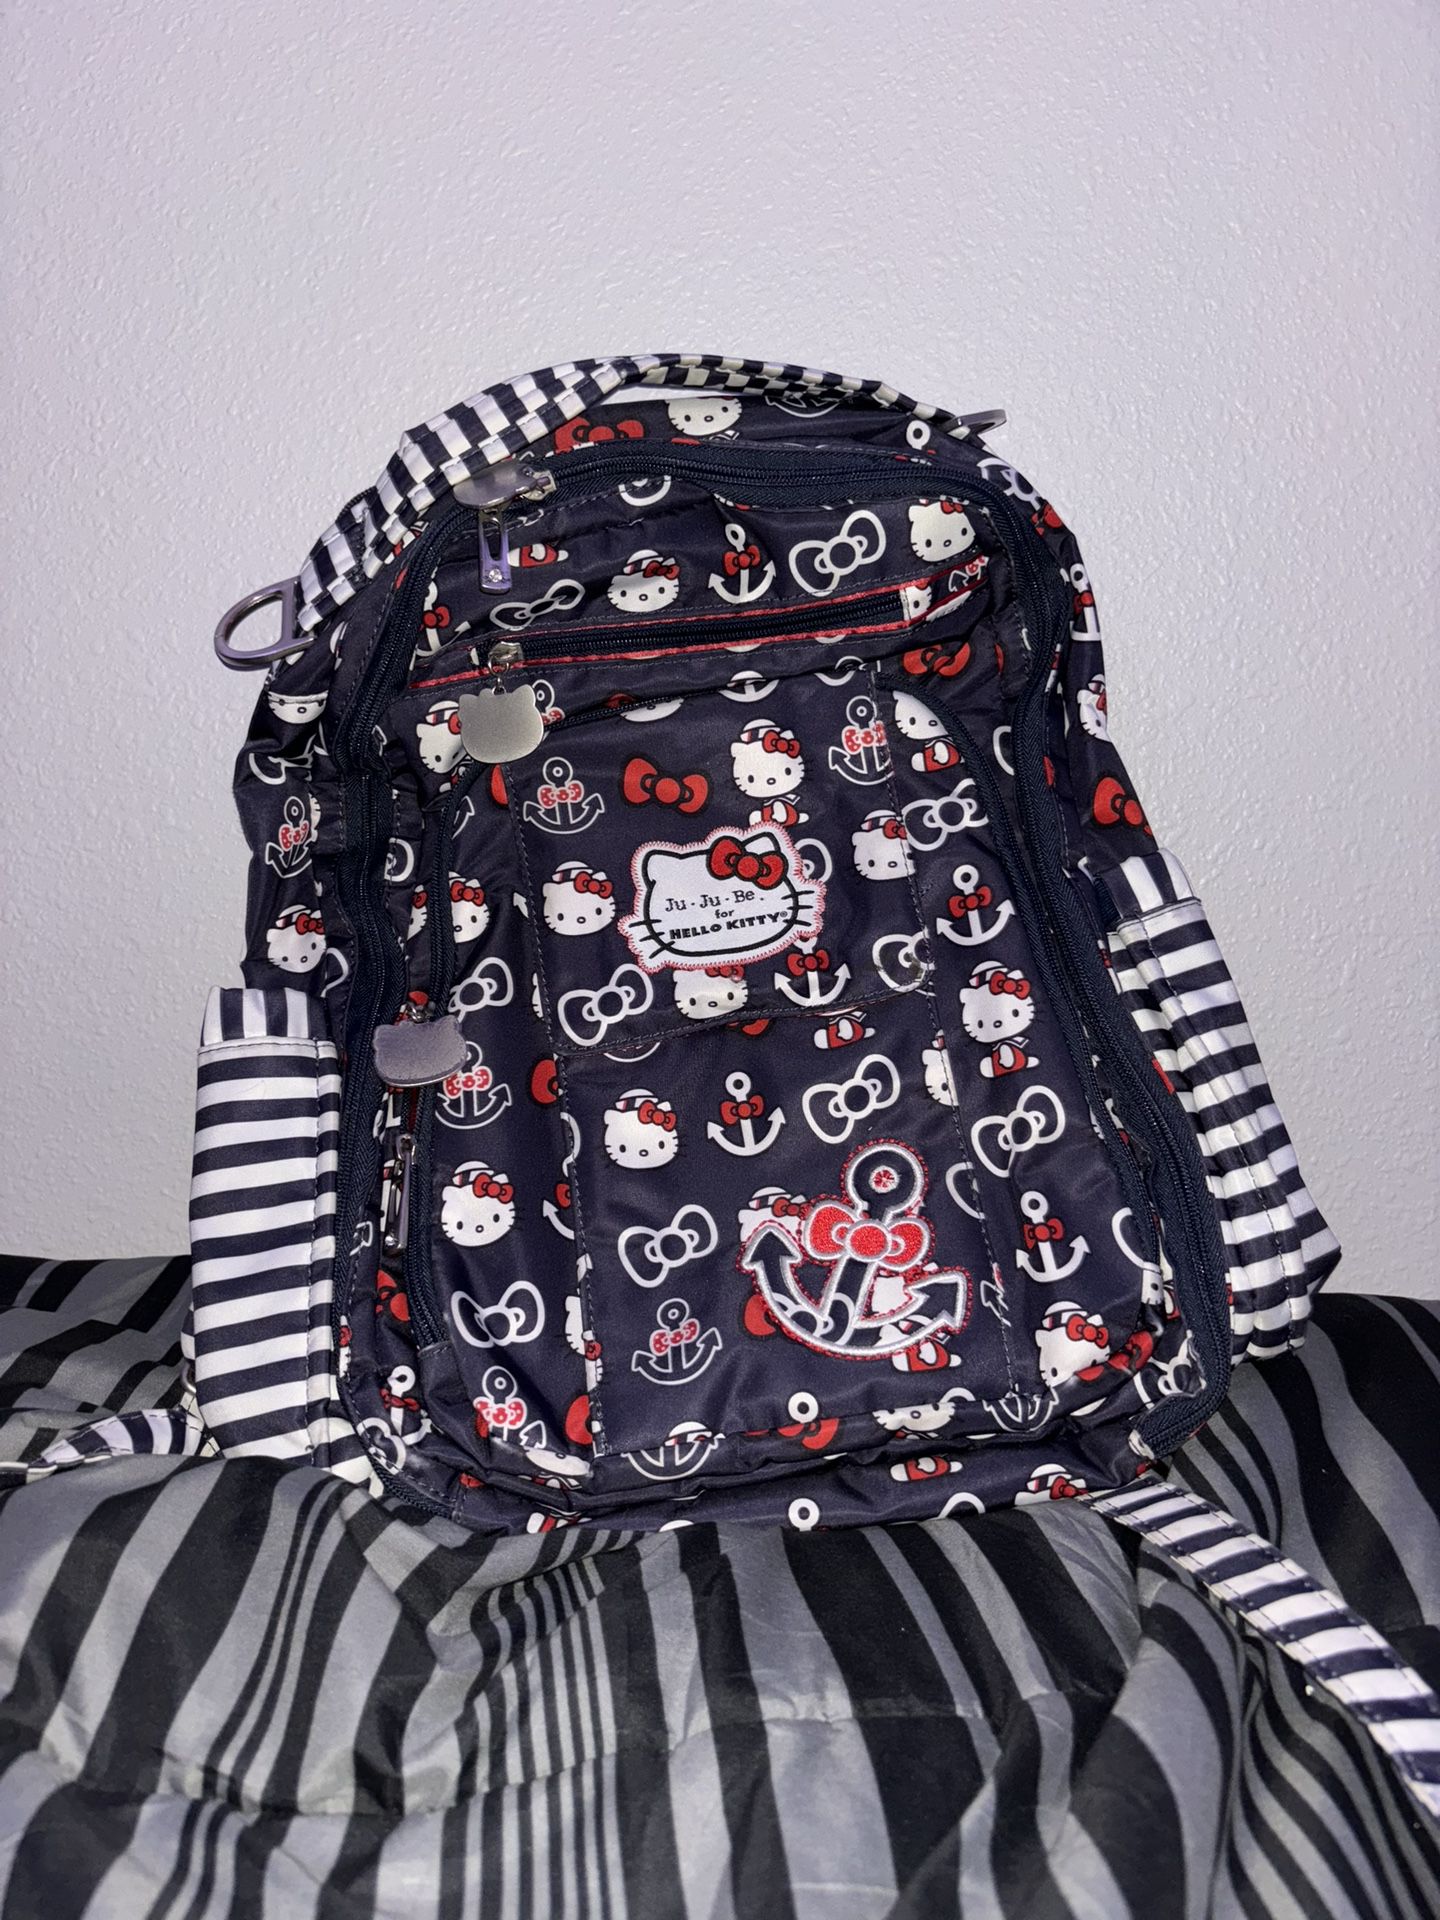 JuJuBe Hello Kitty Backpack 